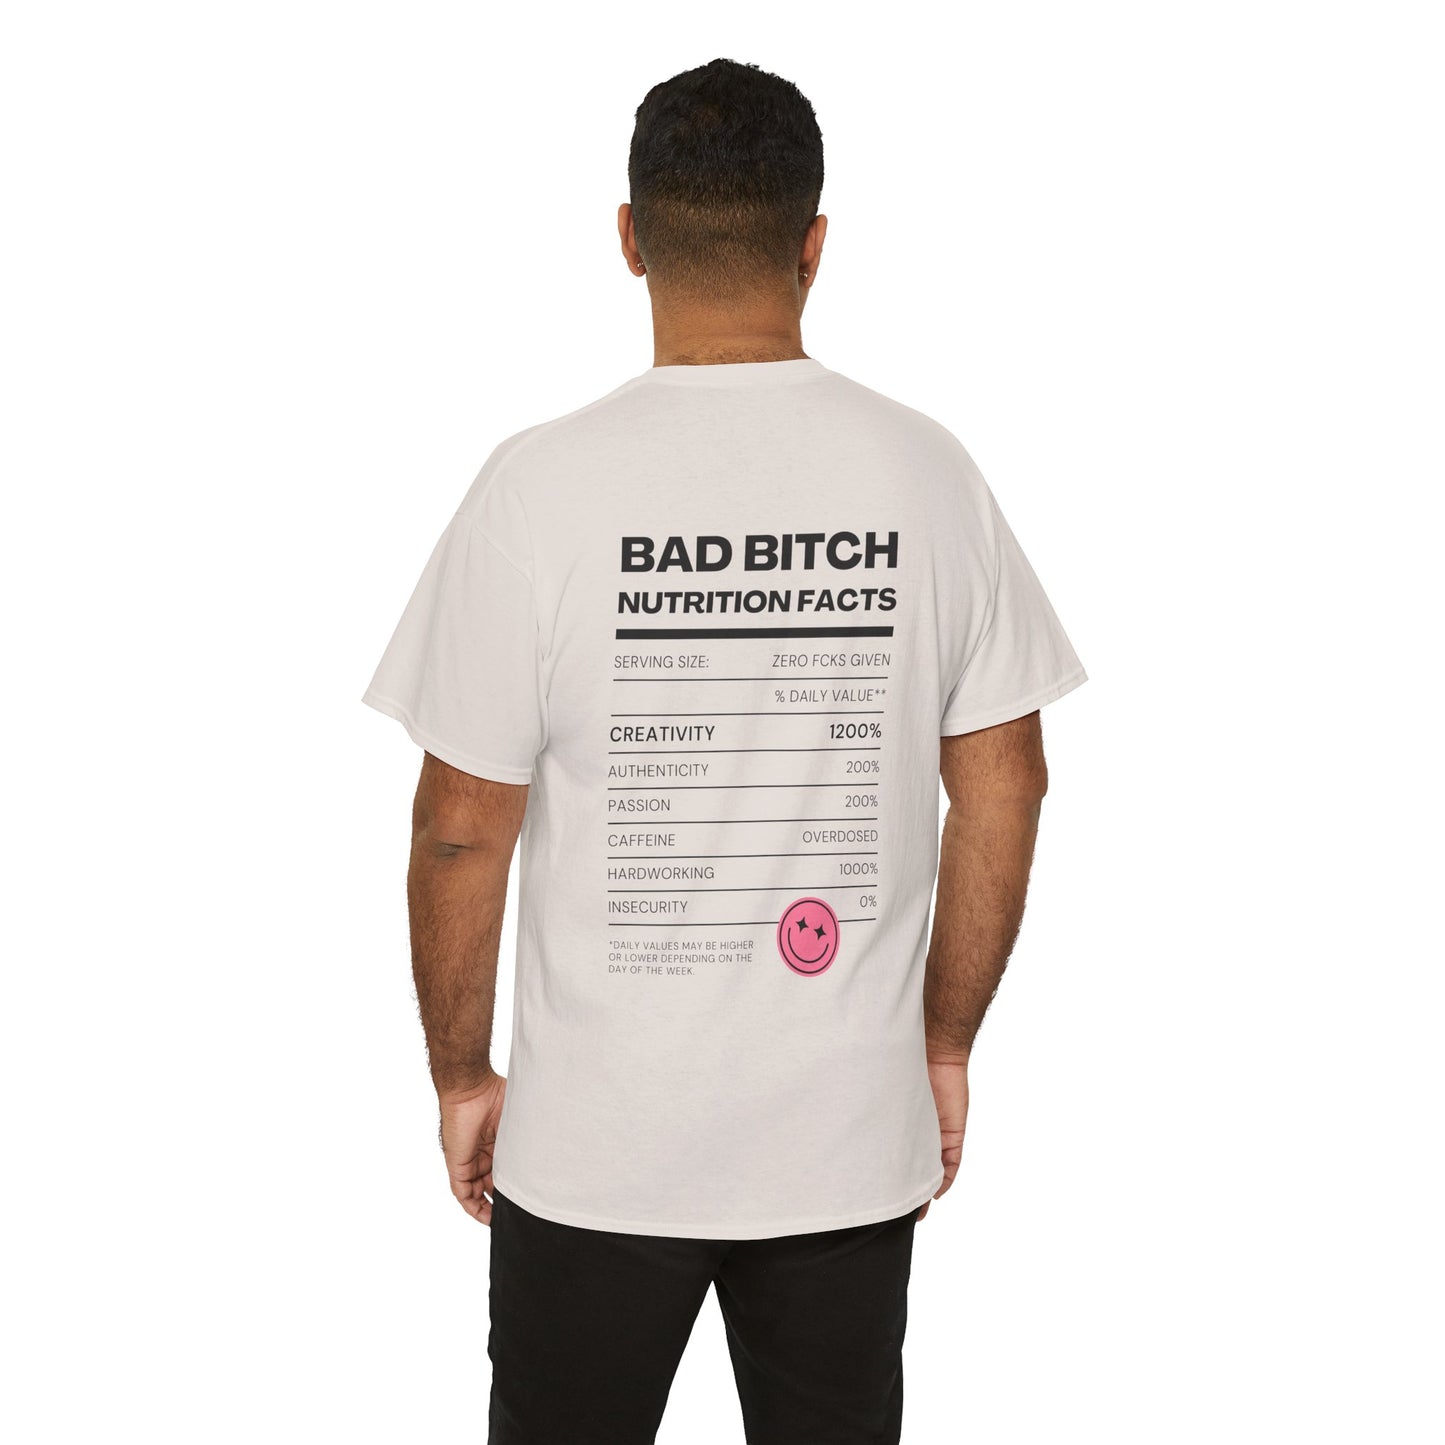 SUNDAY custom merch unisex T-shirt